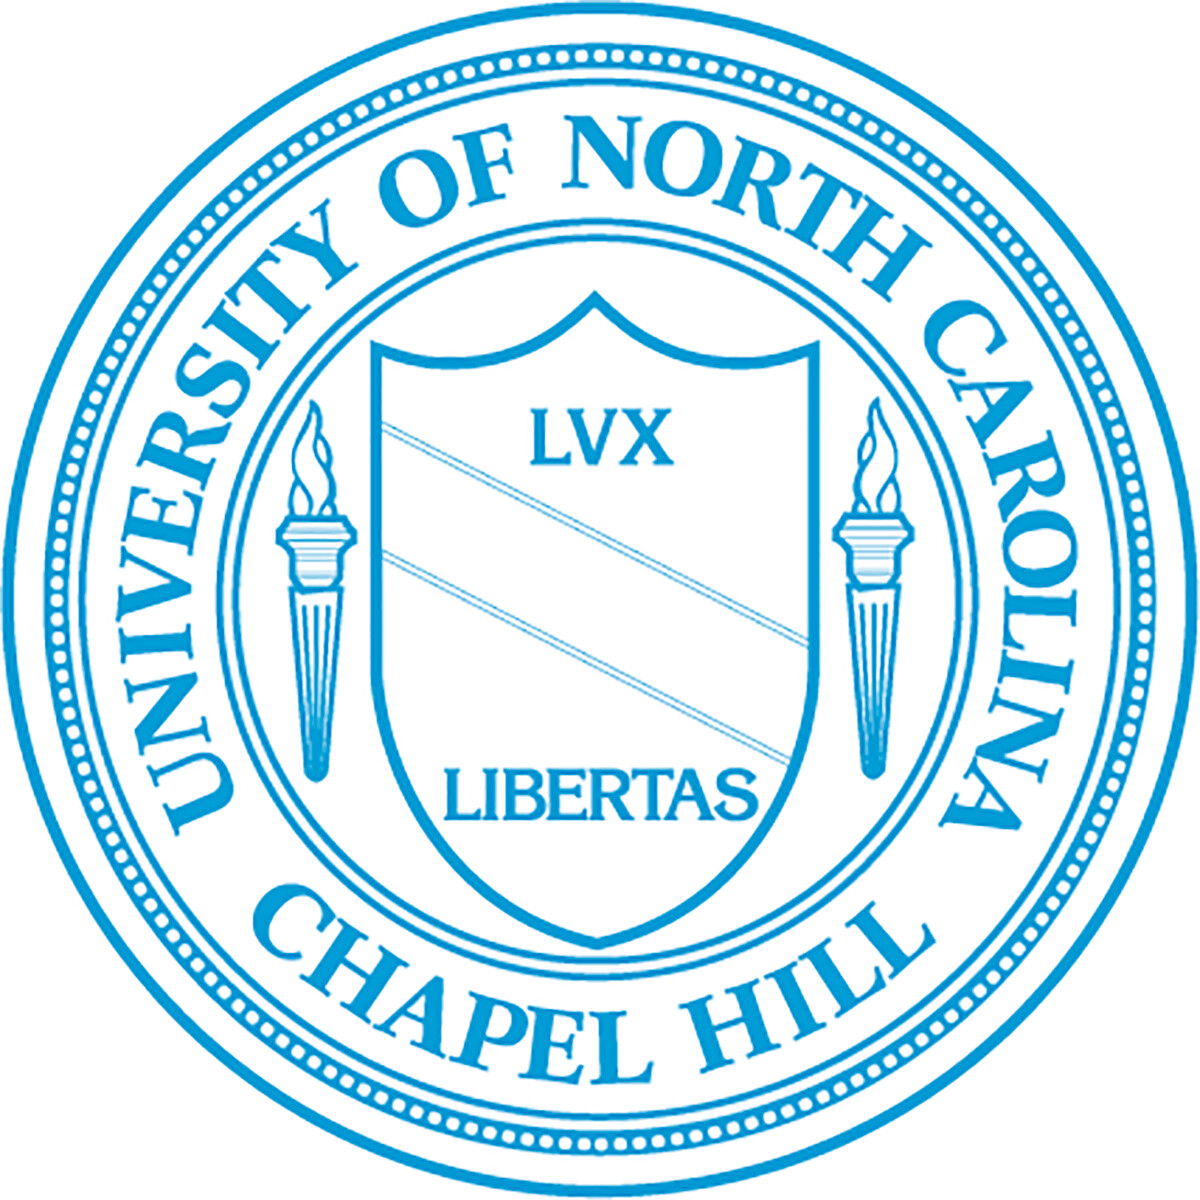 University of North Carolina Chapel Hill Logo